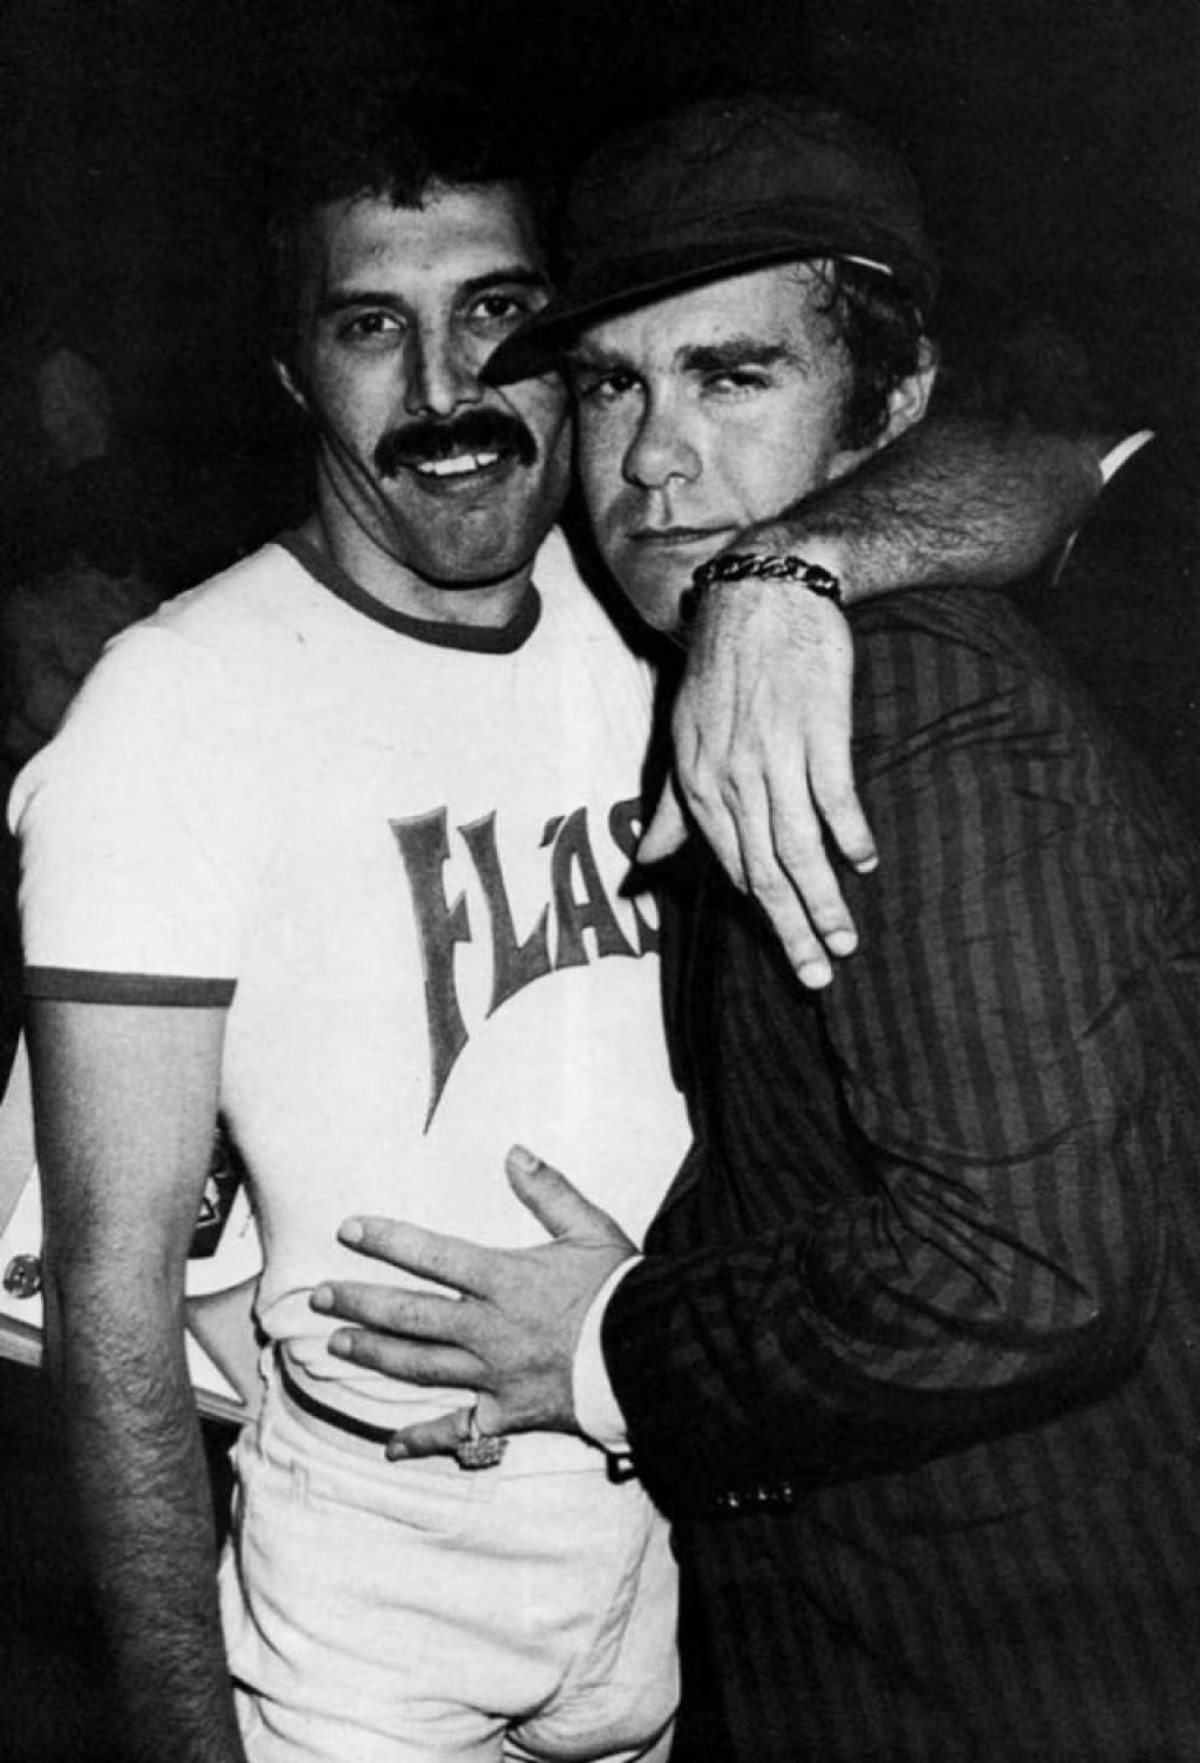 Freddie and Elton